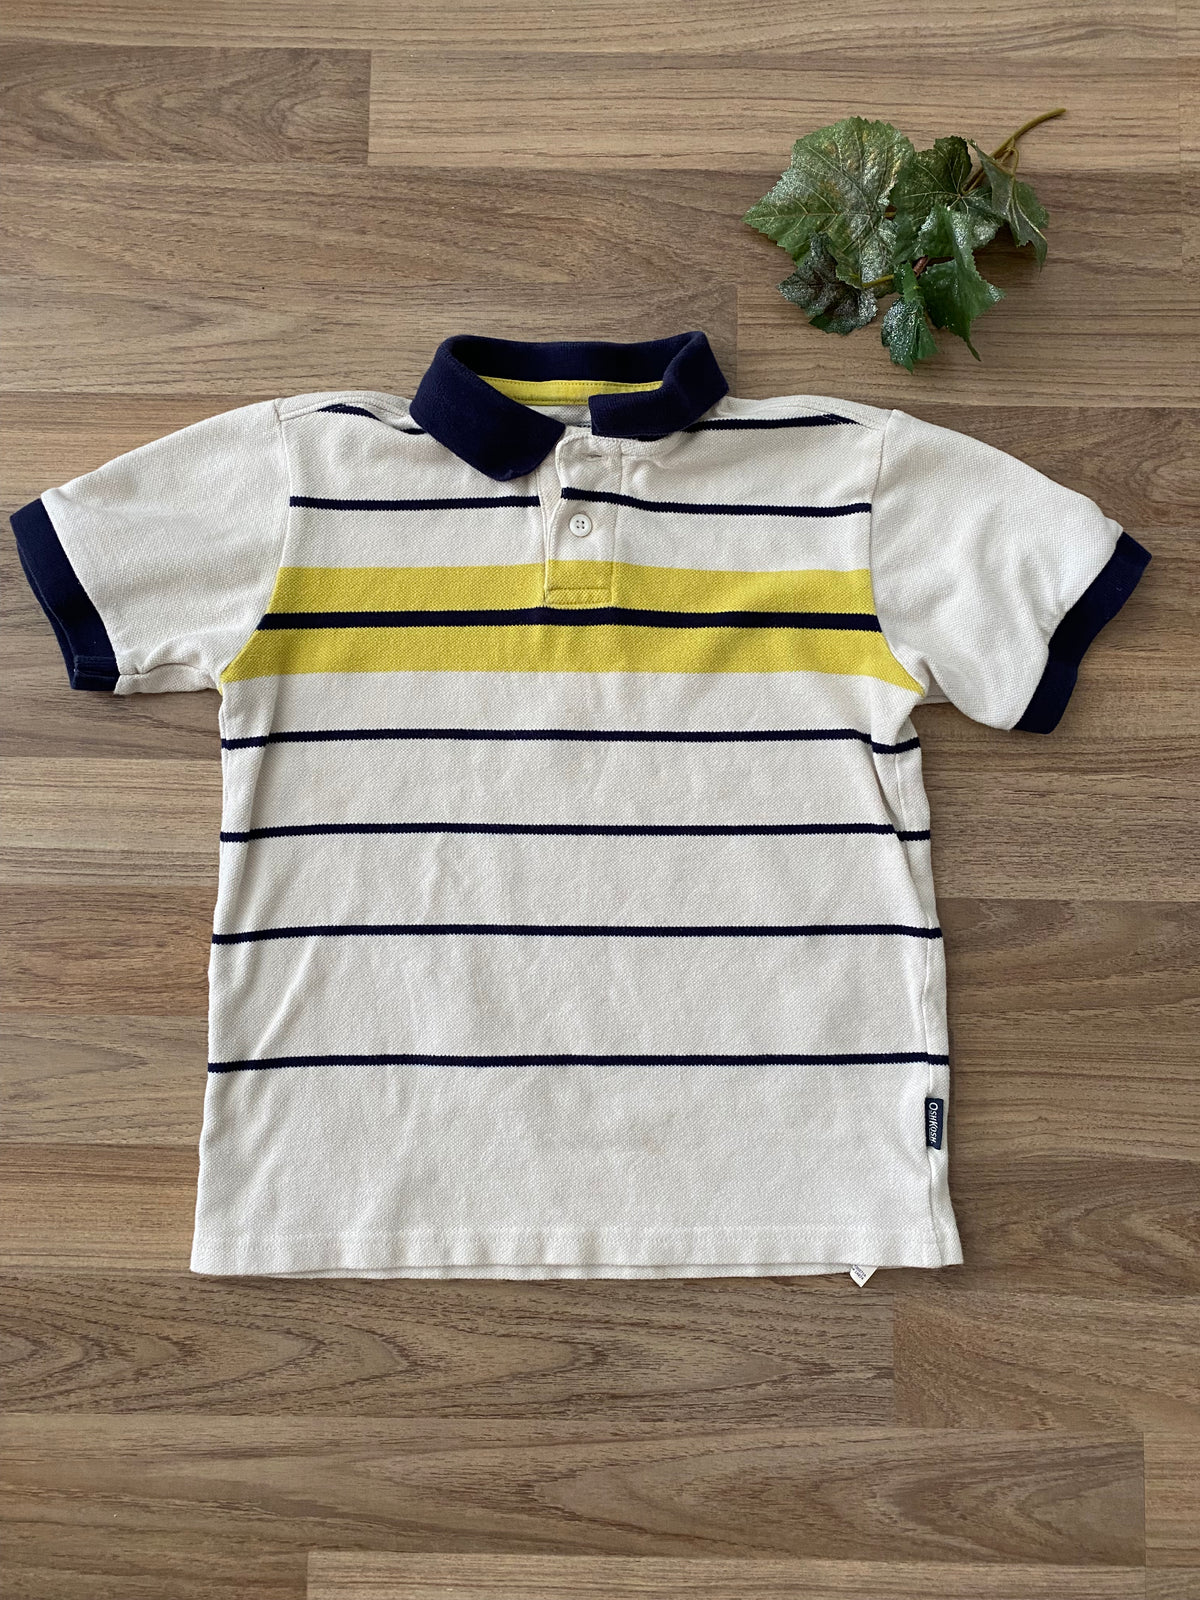 Short Sleeve Striped Shirt (Boys Size 6)